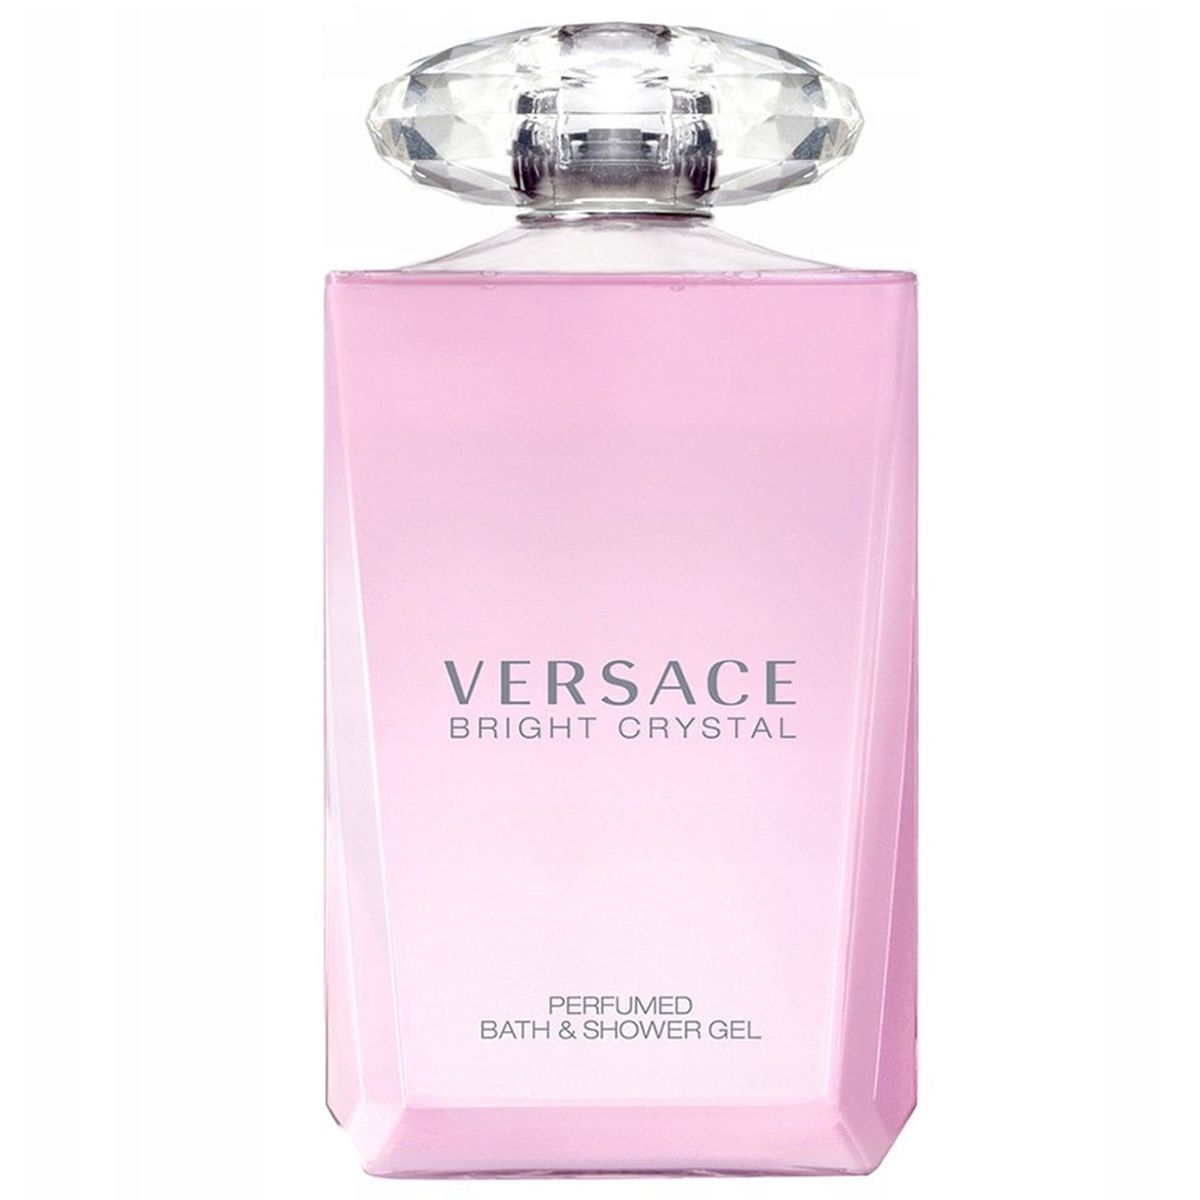  Versace Bright Crystal Perfumed Bath & Shower Gel 